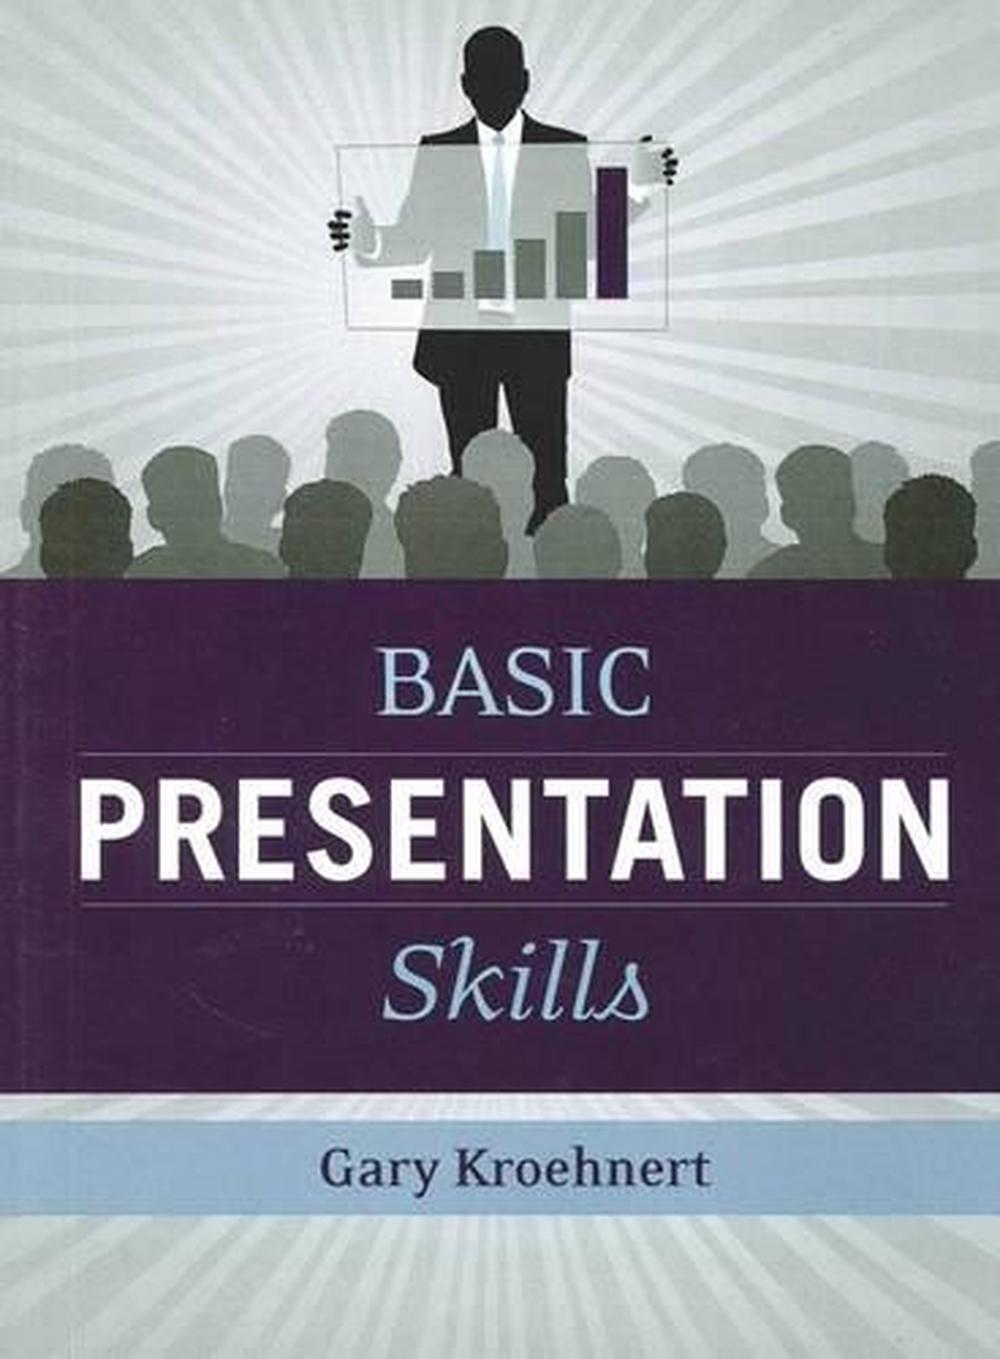 presentation definition book